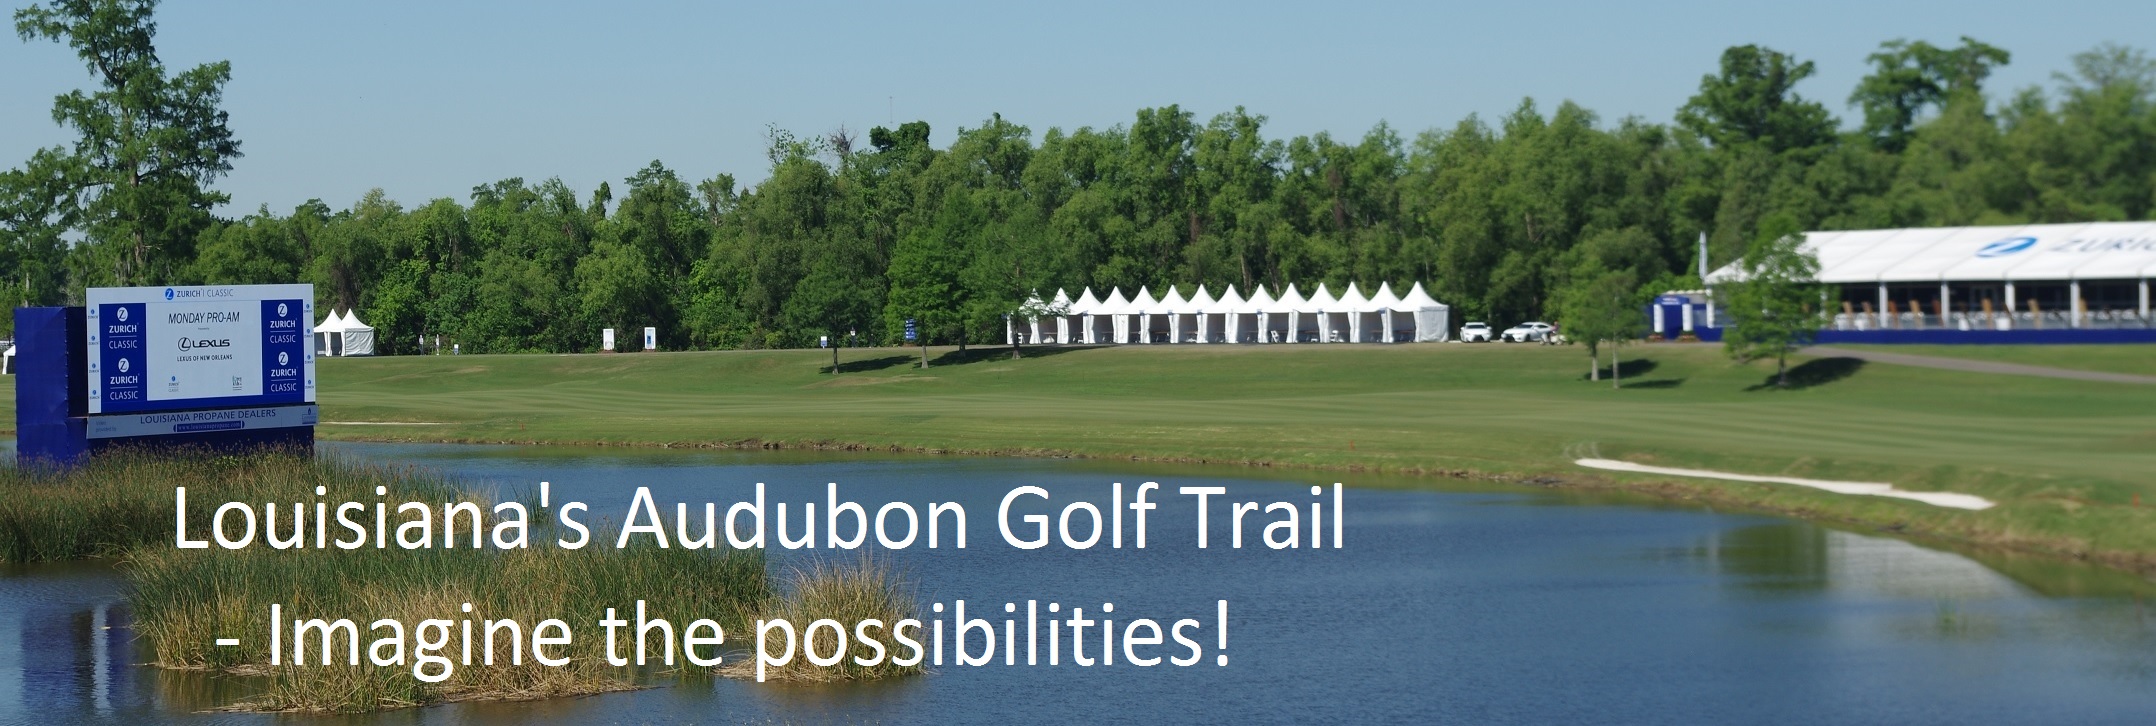 Louisiana Audubon Golf Trail in Golf Oklahoma Magazine